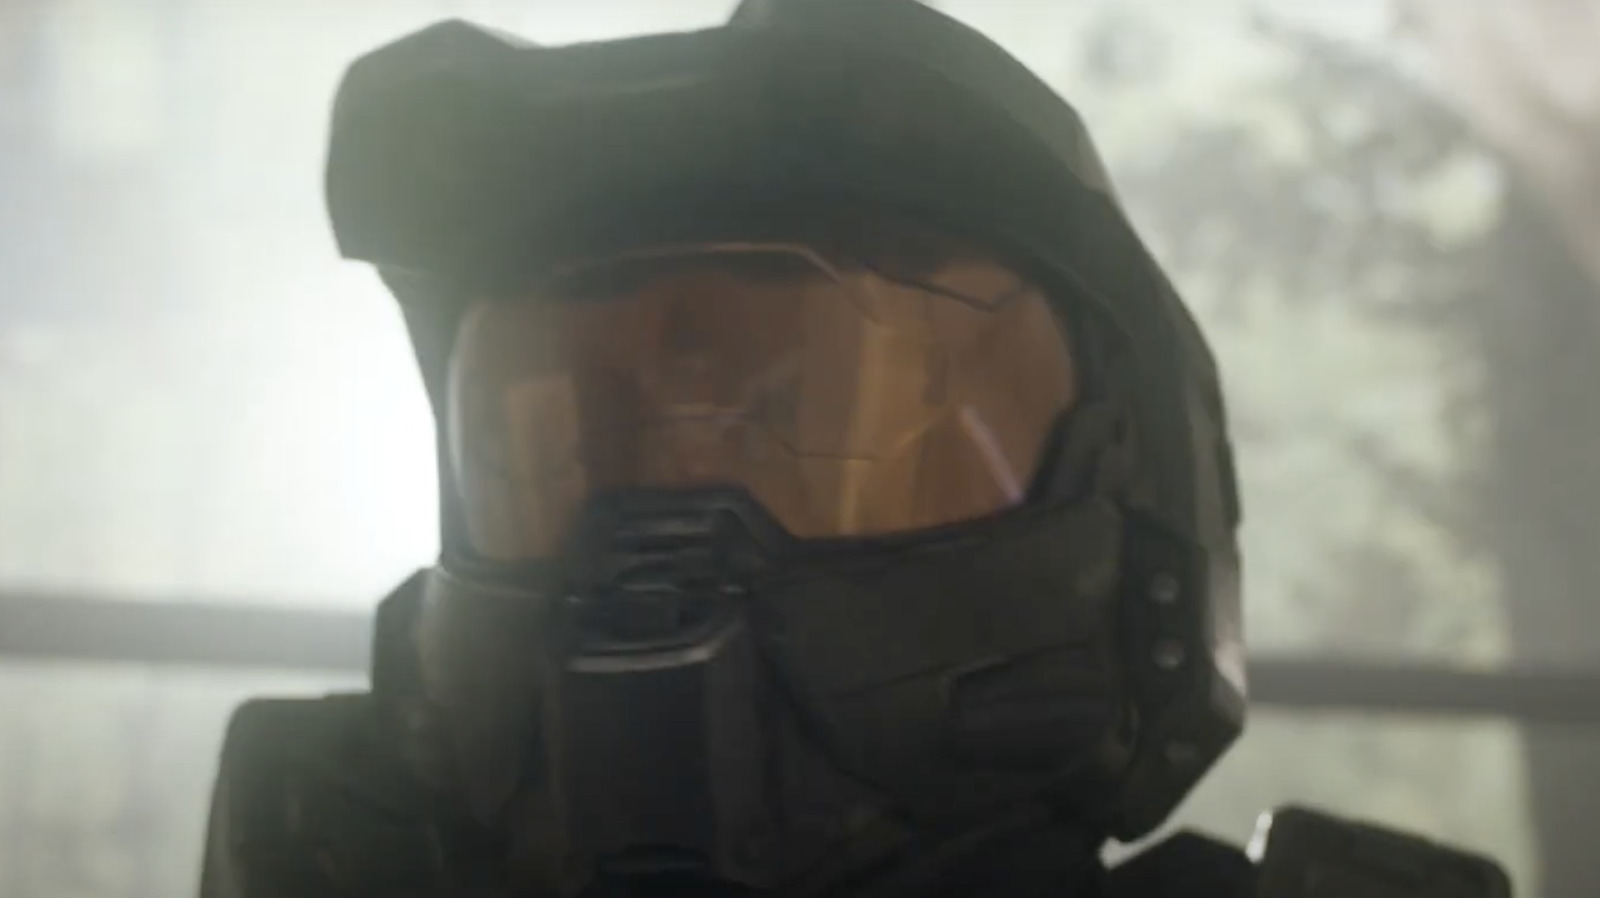 Halo Season 2 Trailer Reveals Master Chief's Return, New Cortana